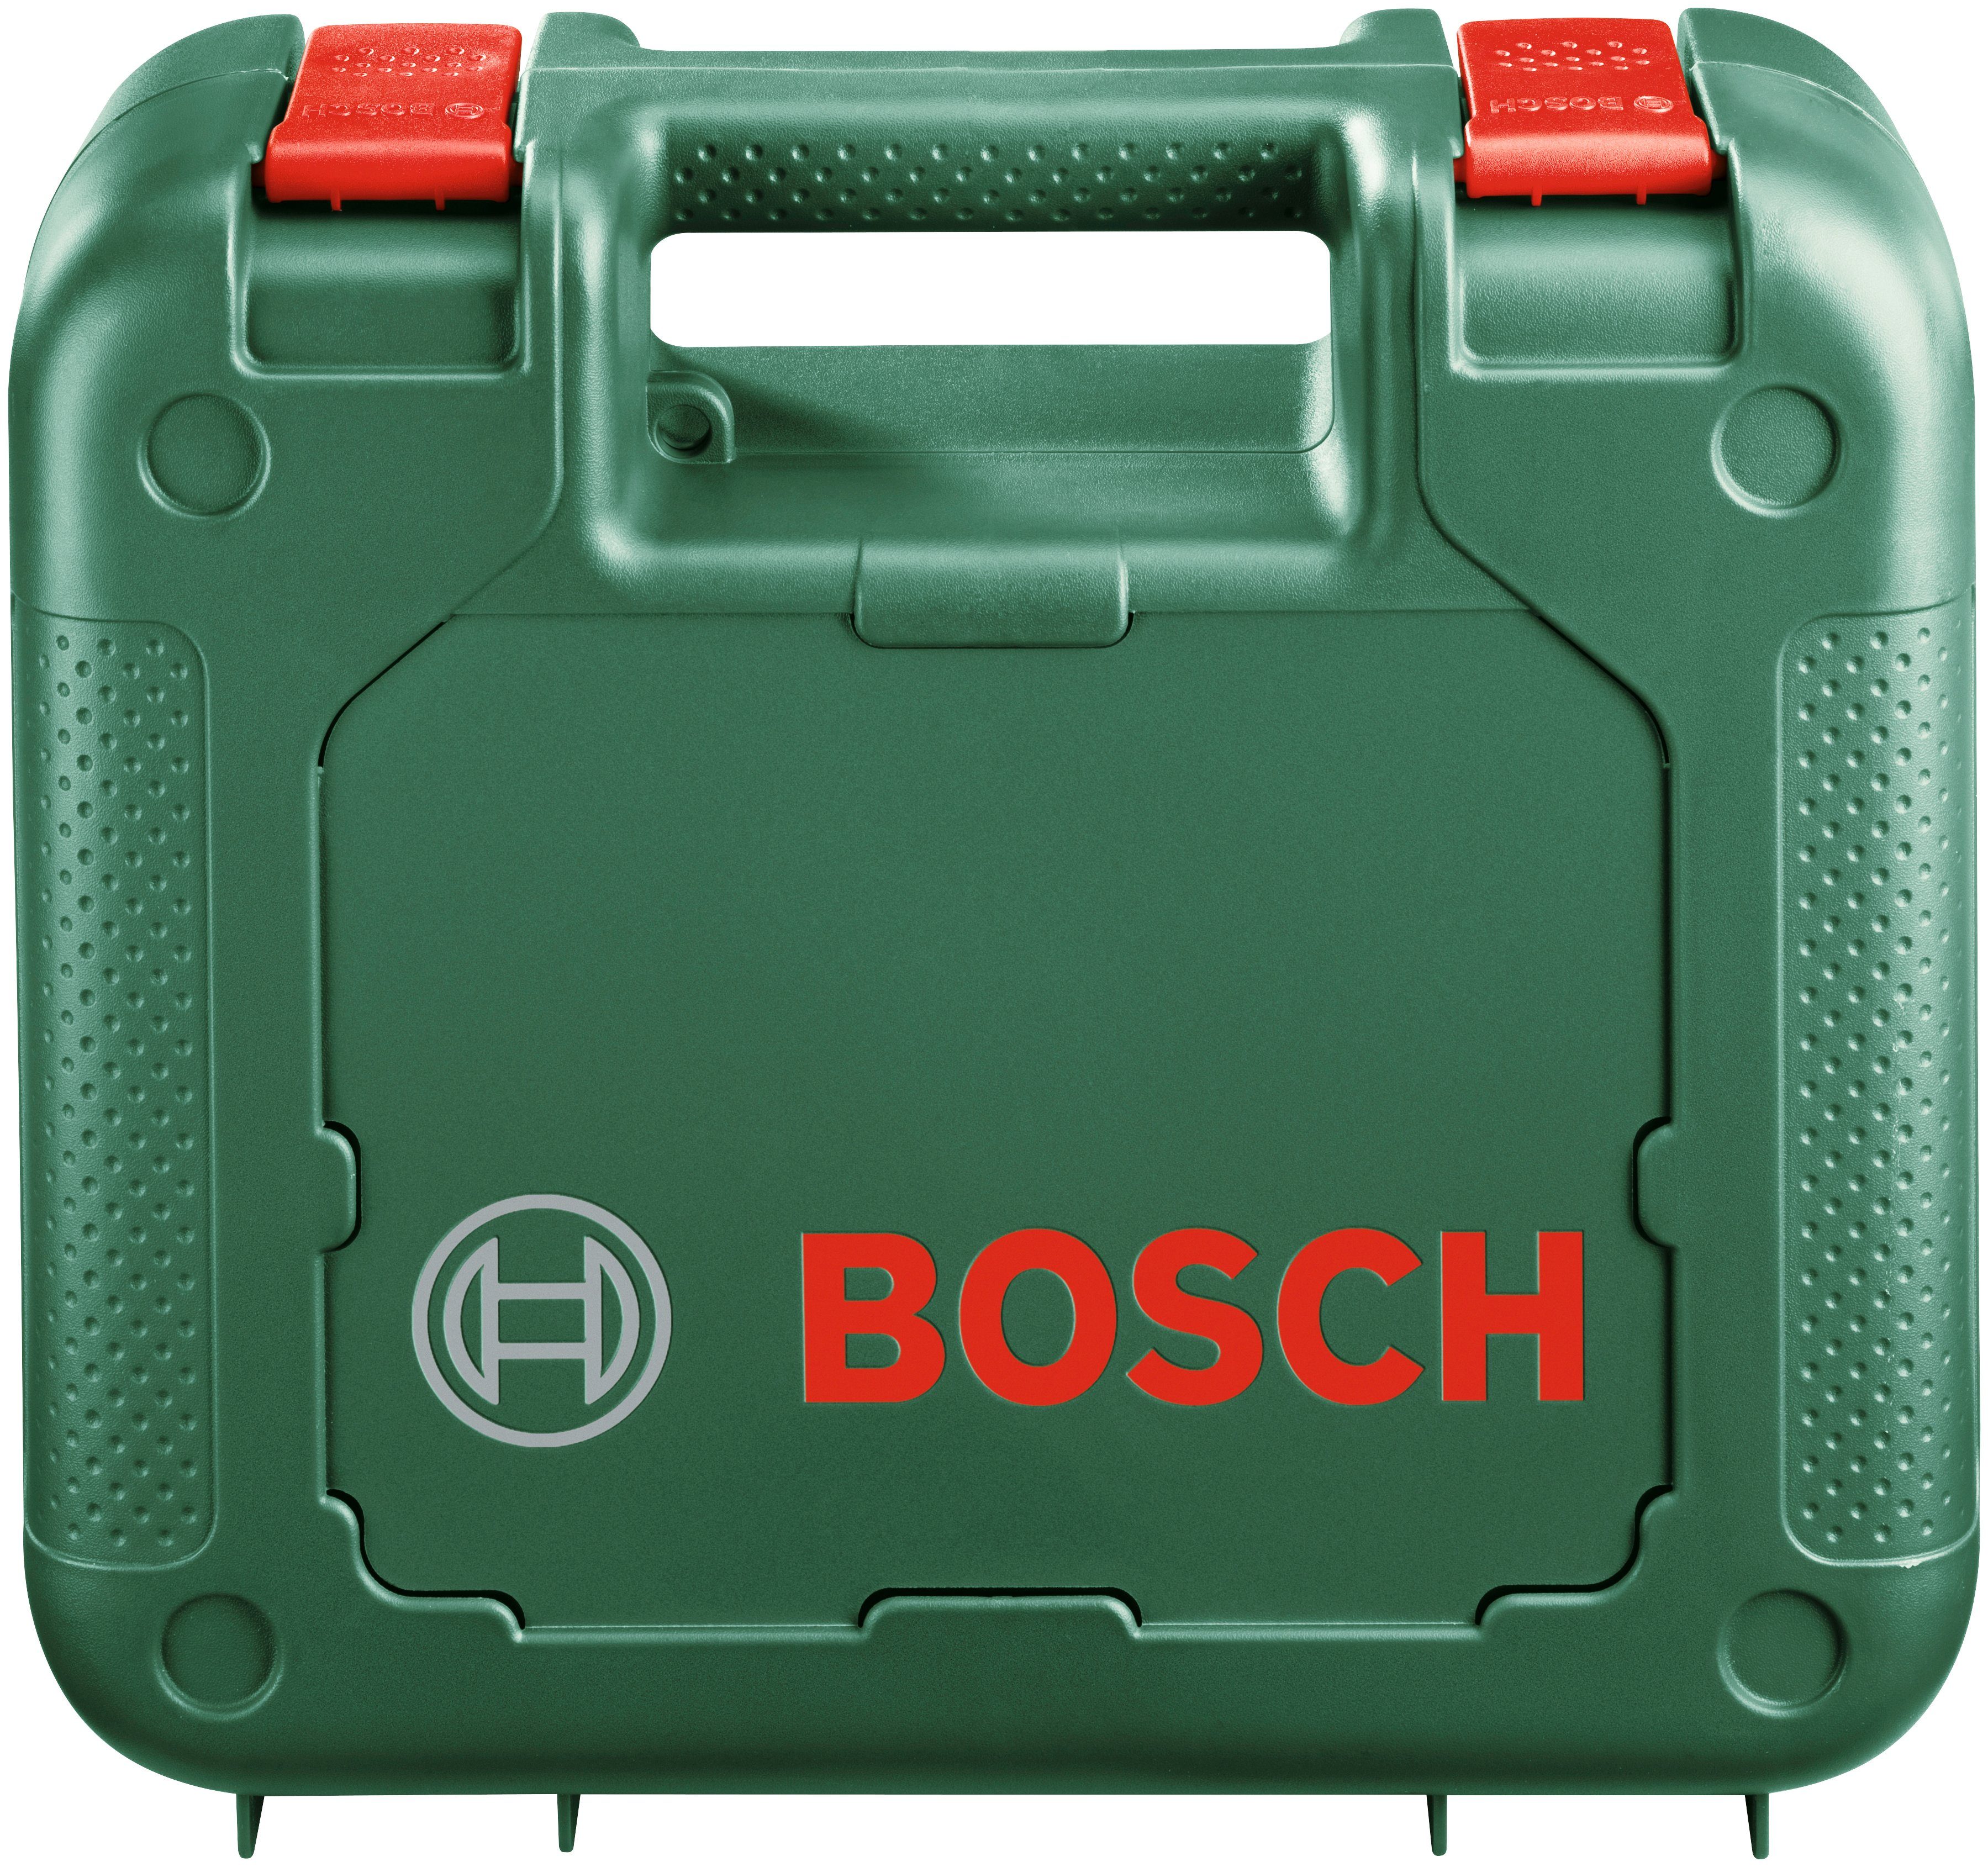 Bosch Home Mikro mit & Bit-Set integriertem Akku-Bohrschrauber U/min, max. Select, (Set), Garden USB und PSR Lader 210